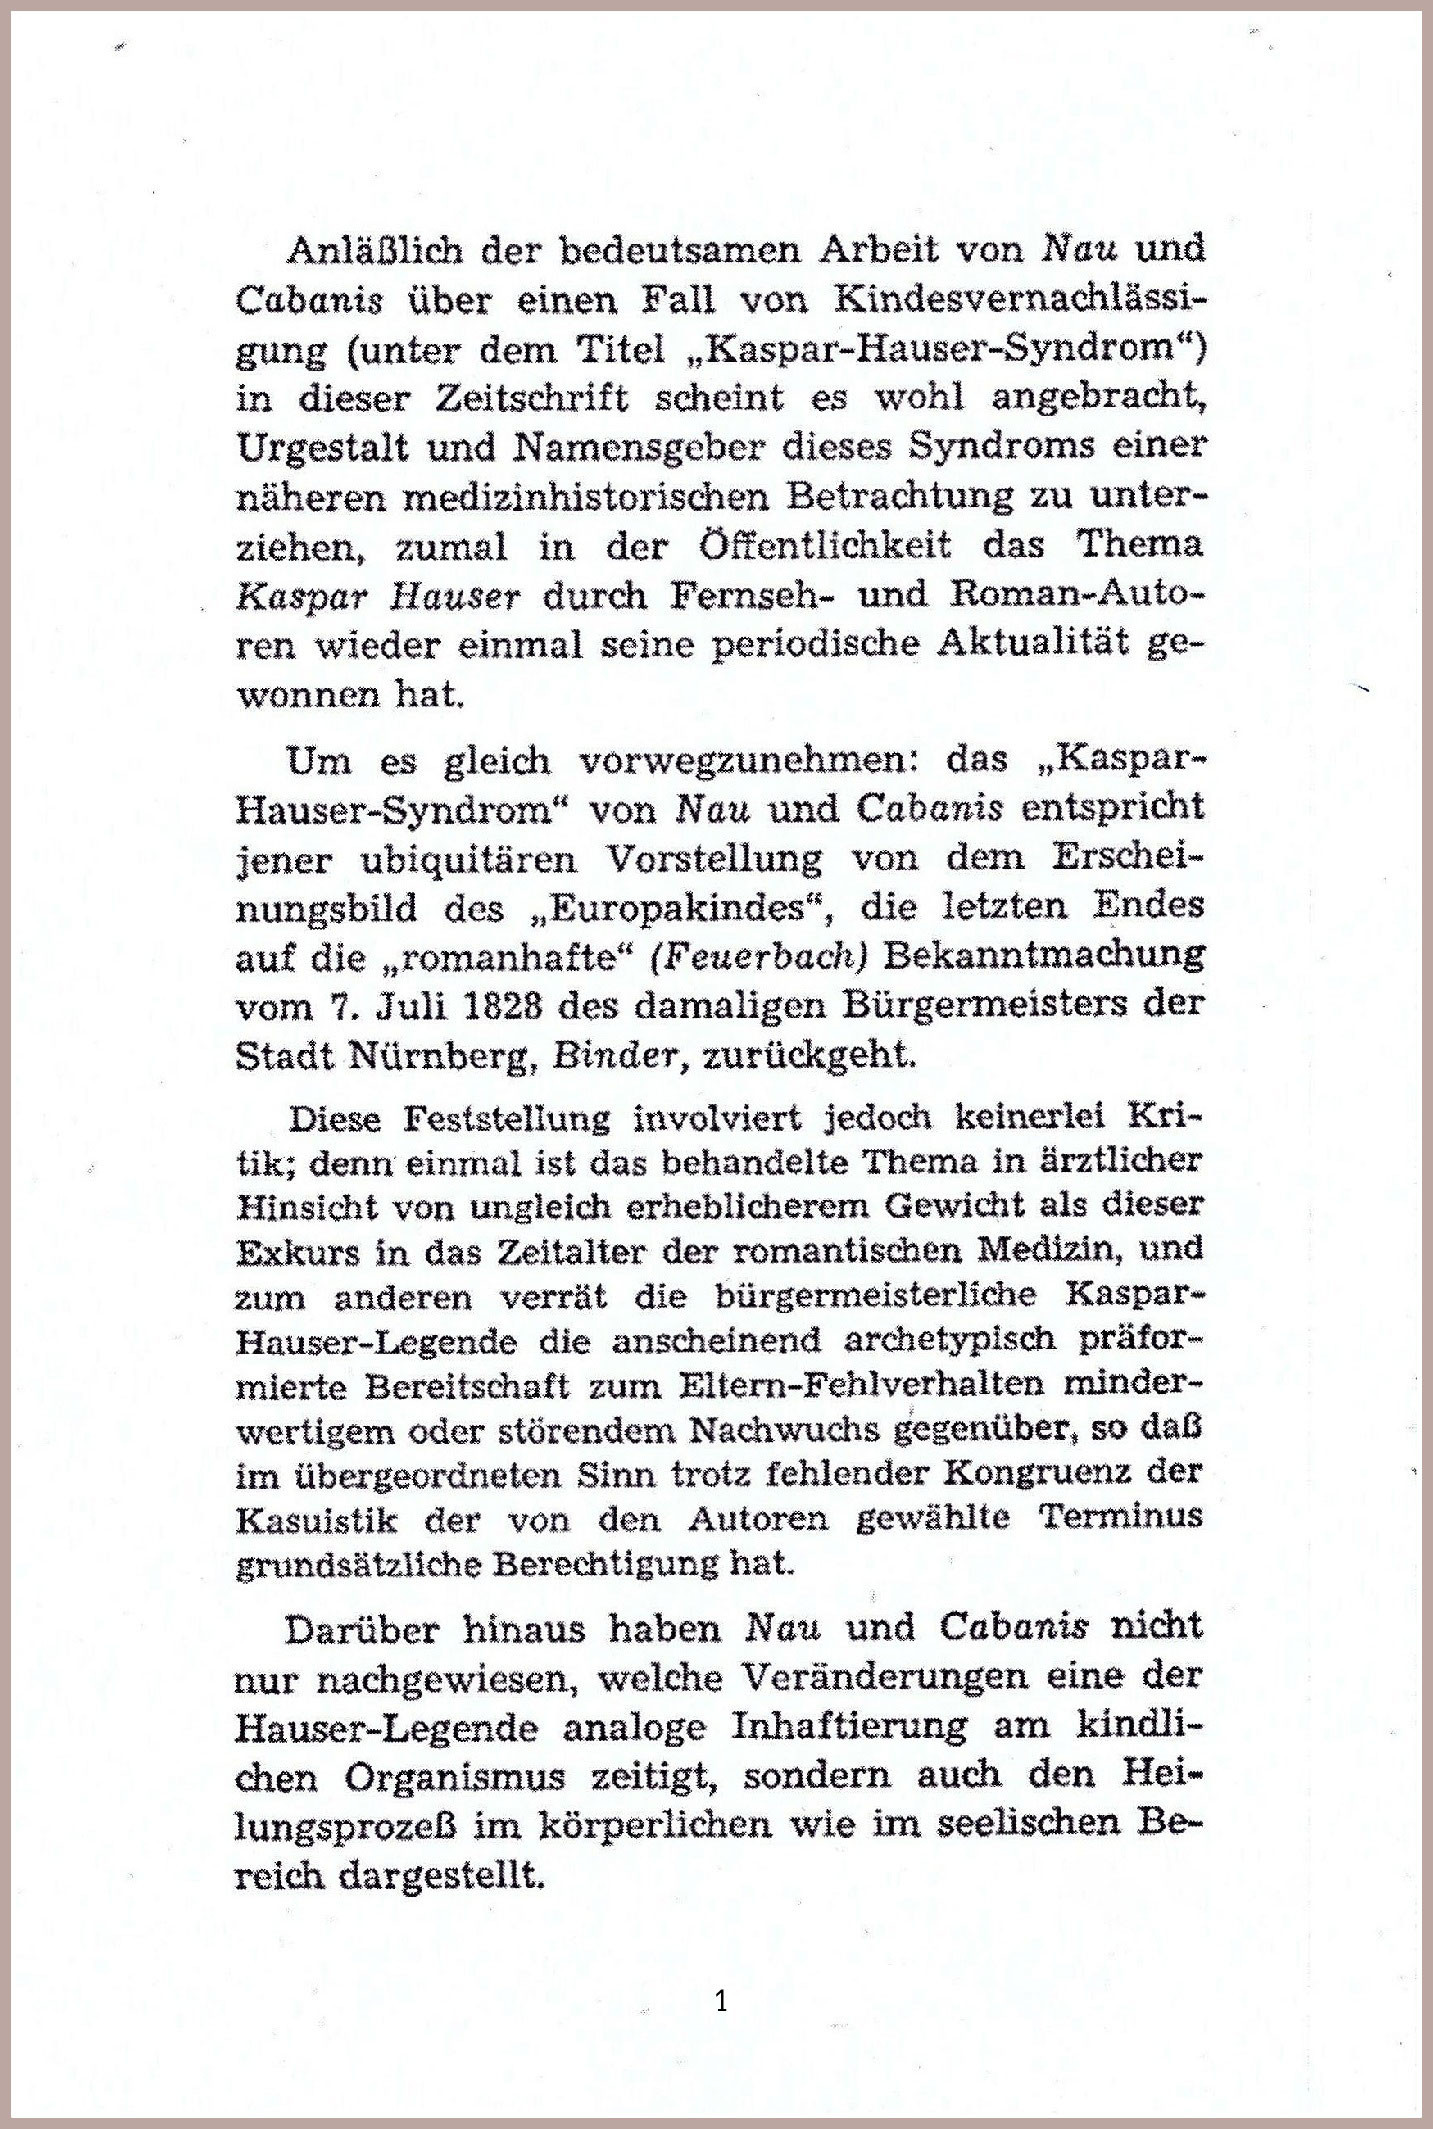 Kaspar Hauser Syndrom
 "Die Krankheit KASPAR HAUSERs" s pathographie